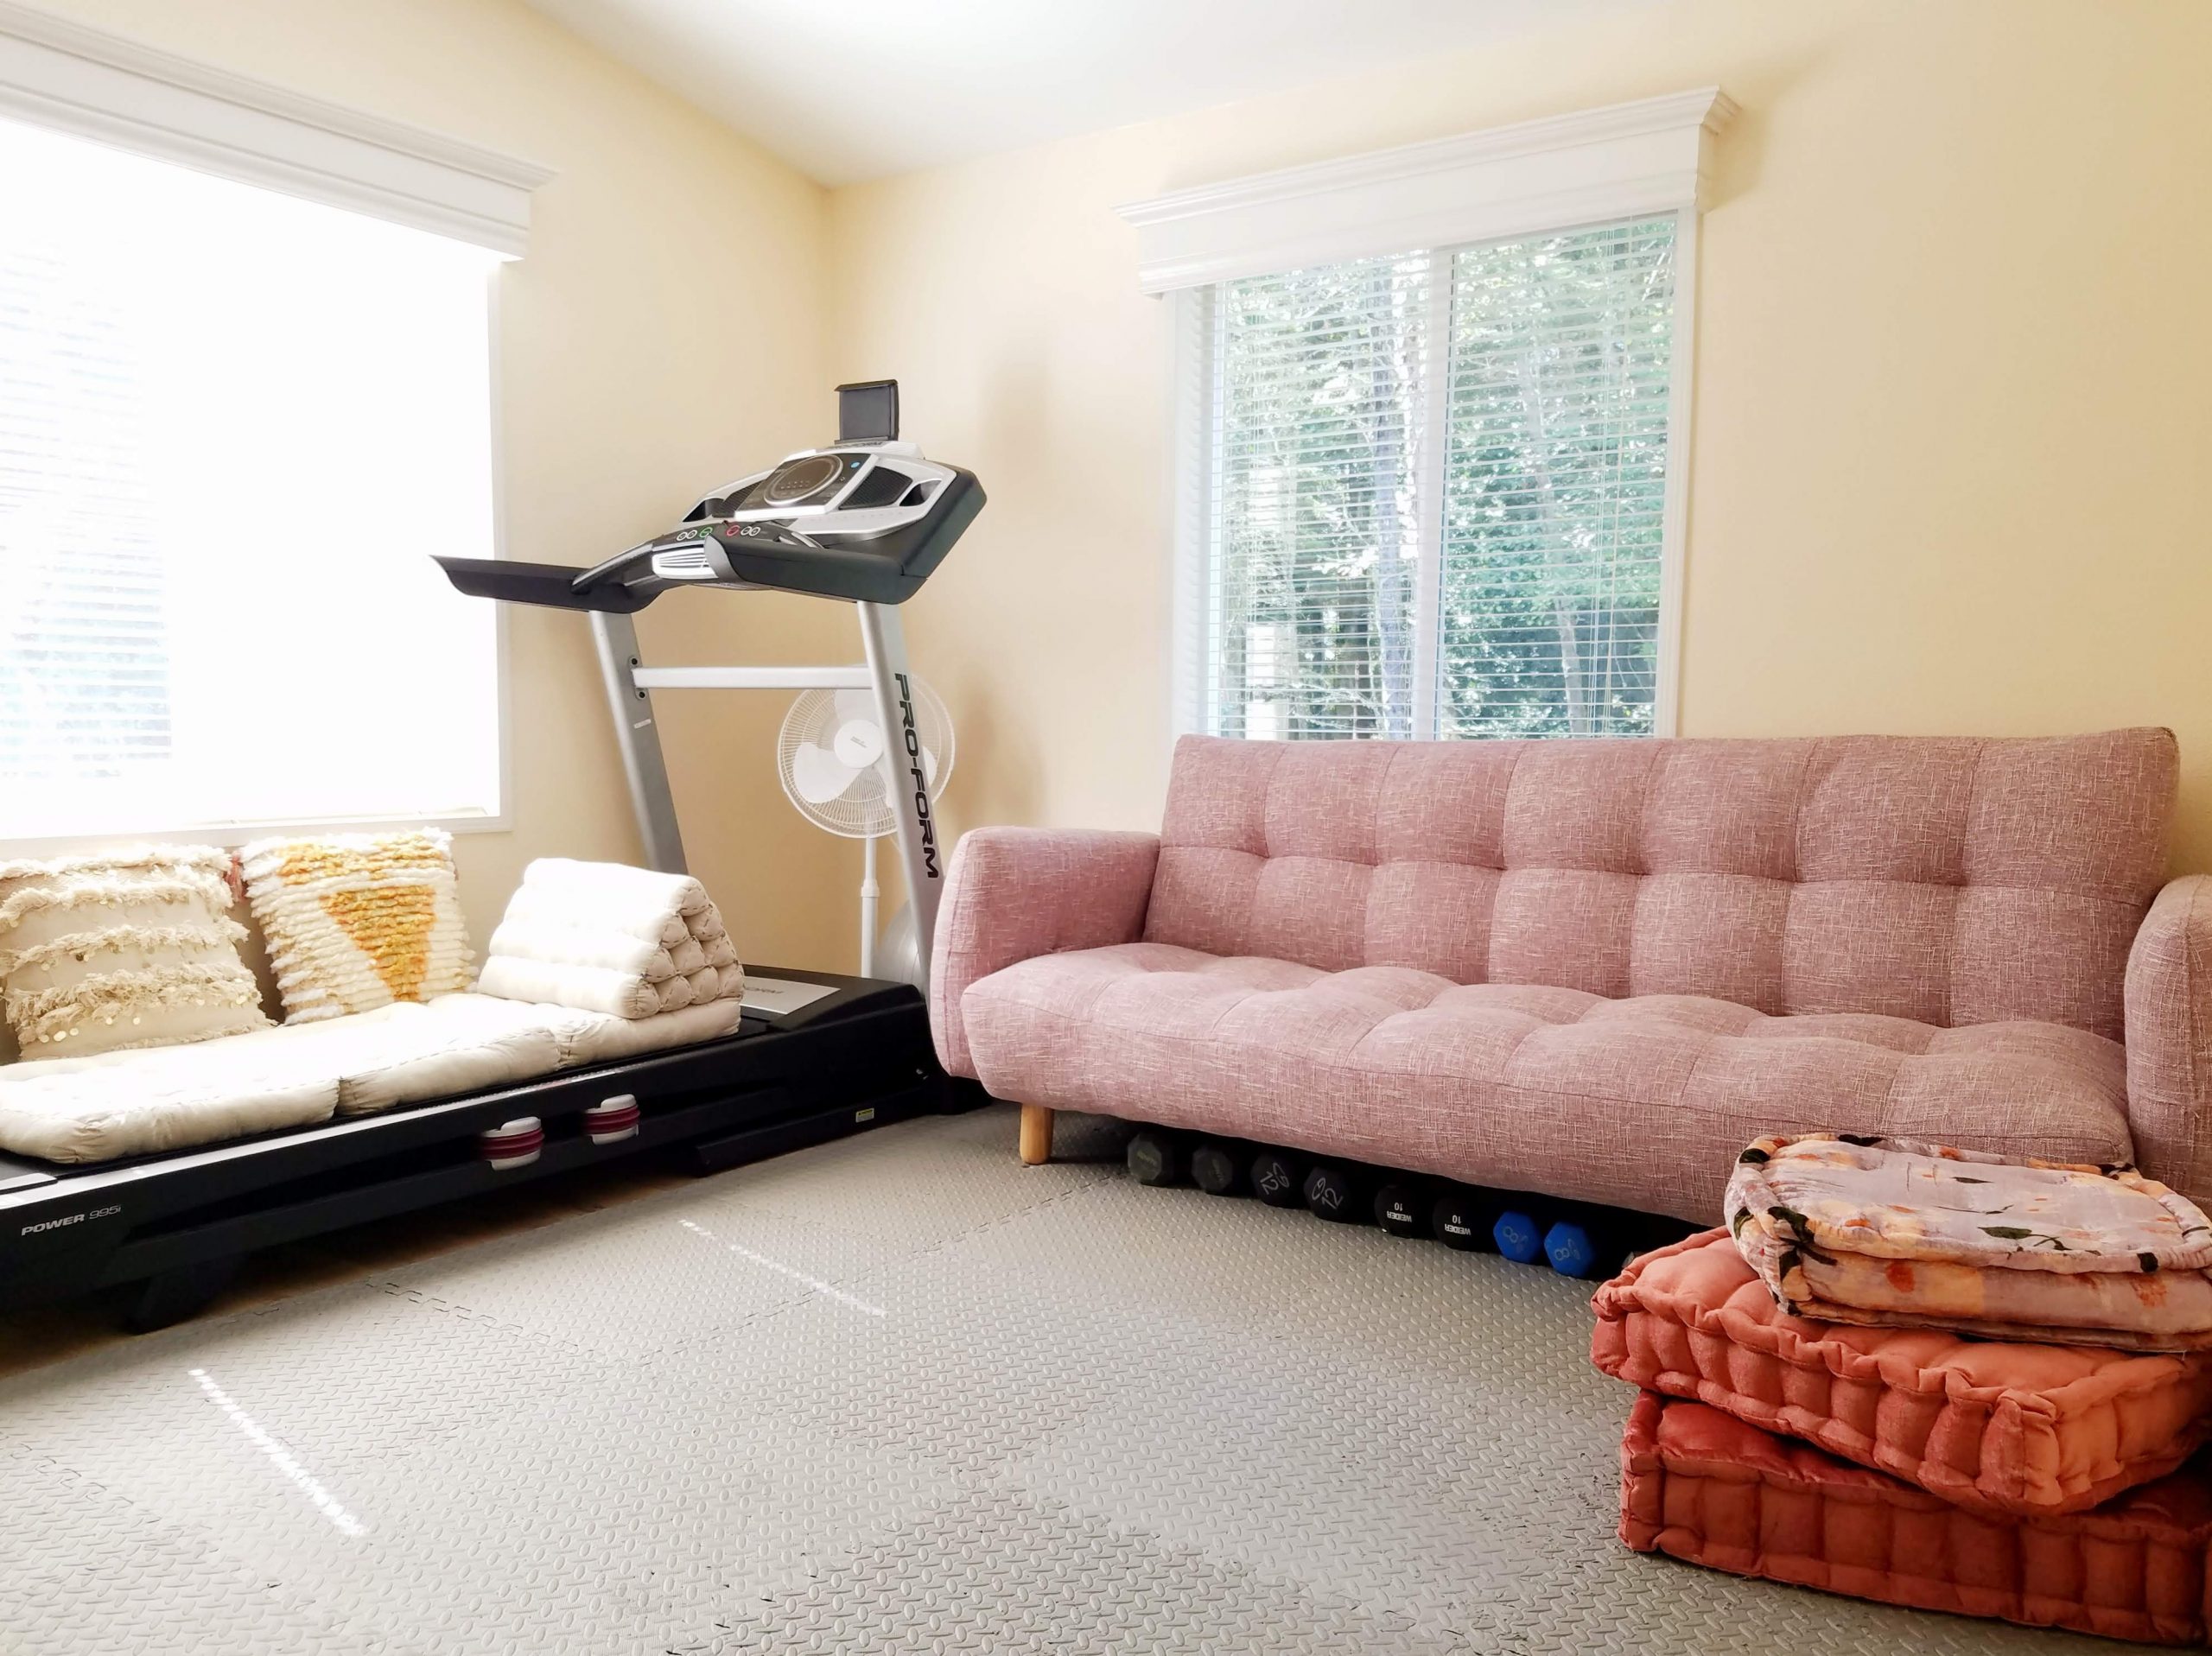 Treadmill In Living Room Ideas: Impressive Ideas